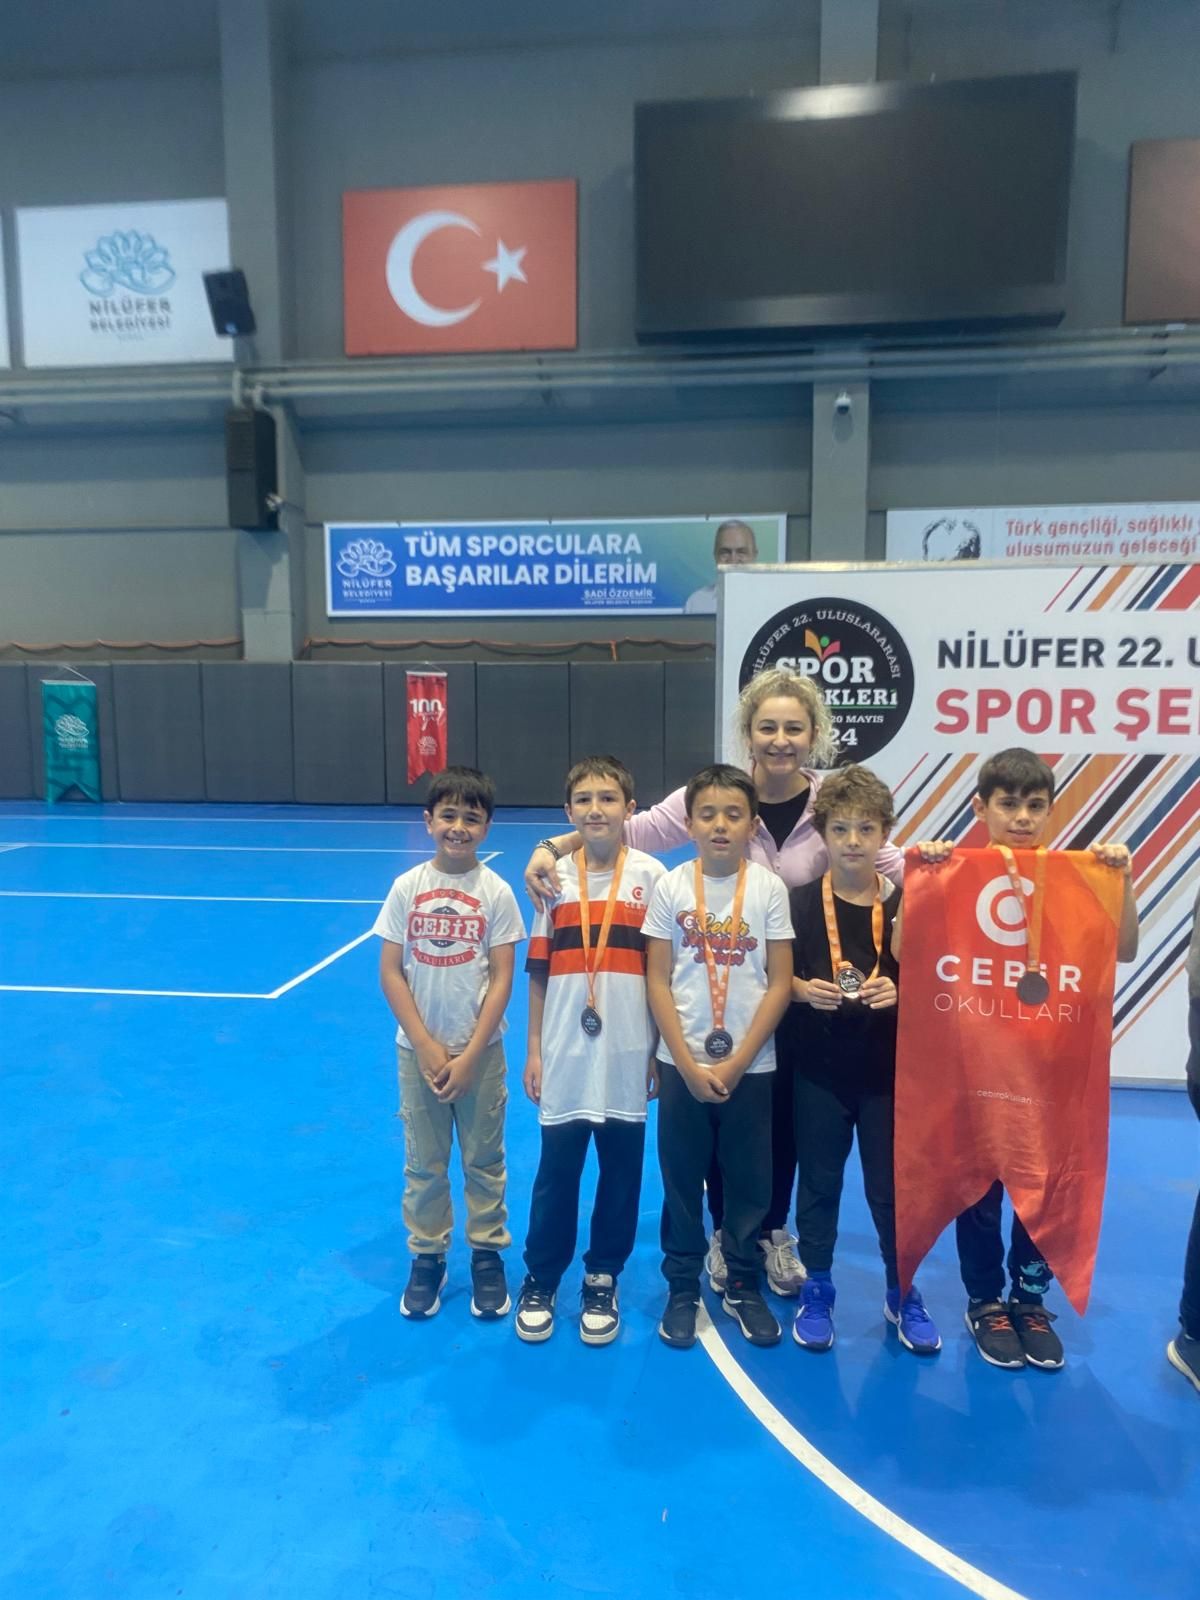 22. Nilfer Spor enlikleri Badminton Turnuvas Erkekler B Takmmz 3. Oldu!!